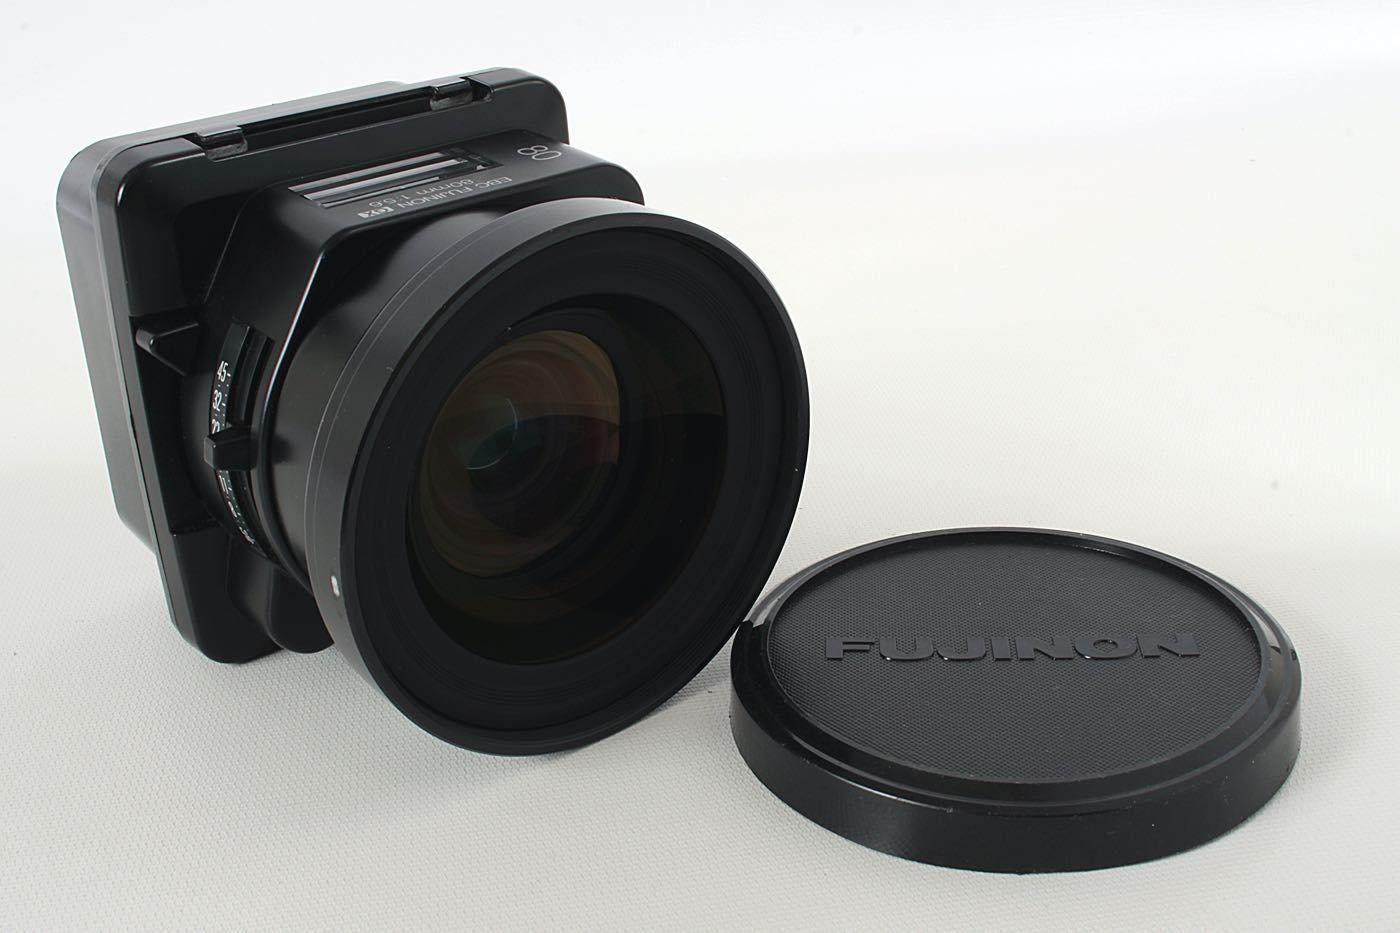 Lente - Fujifilm GX680 - 80mm F3.2